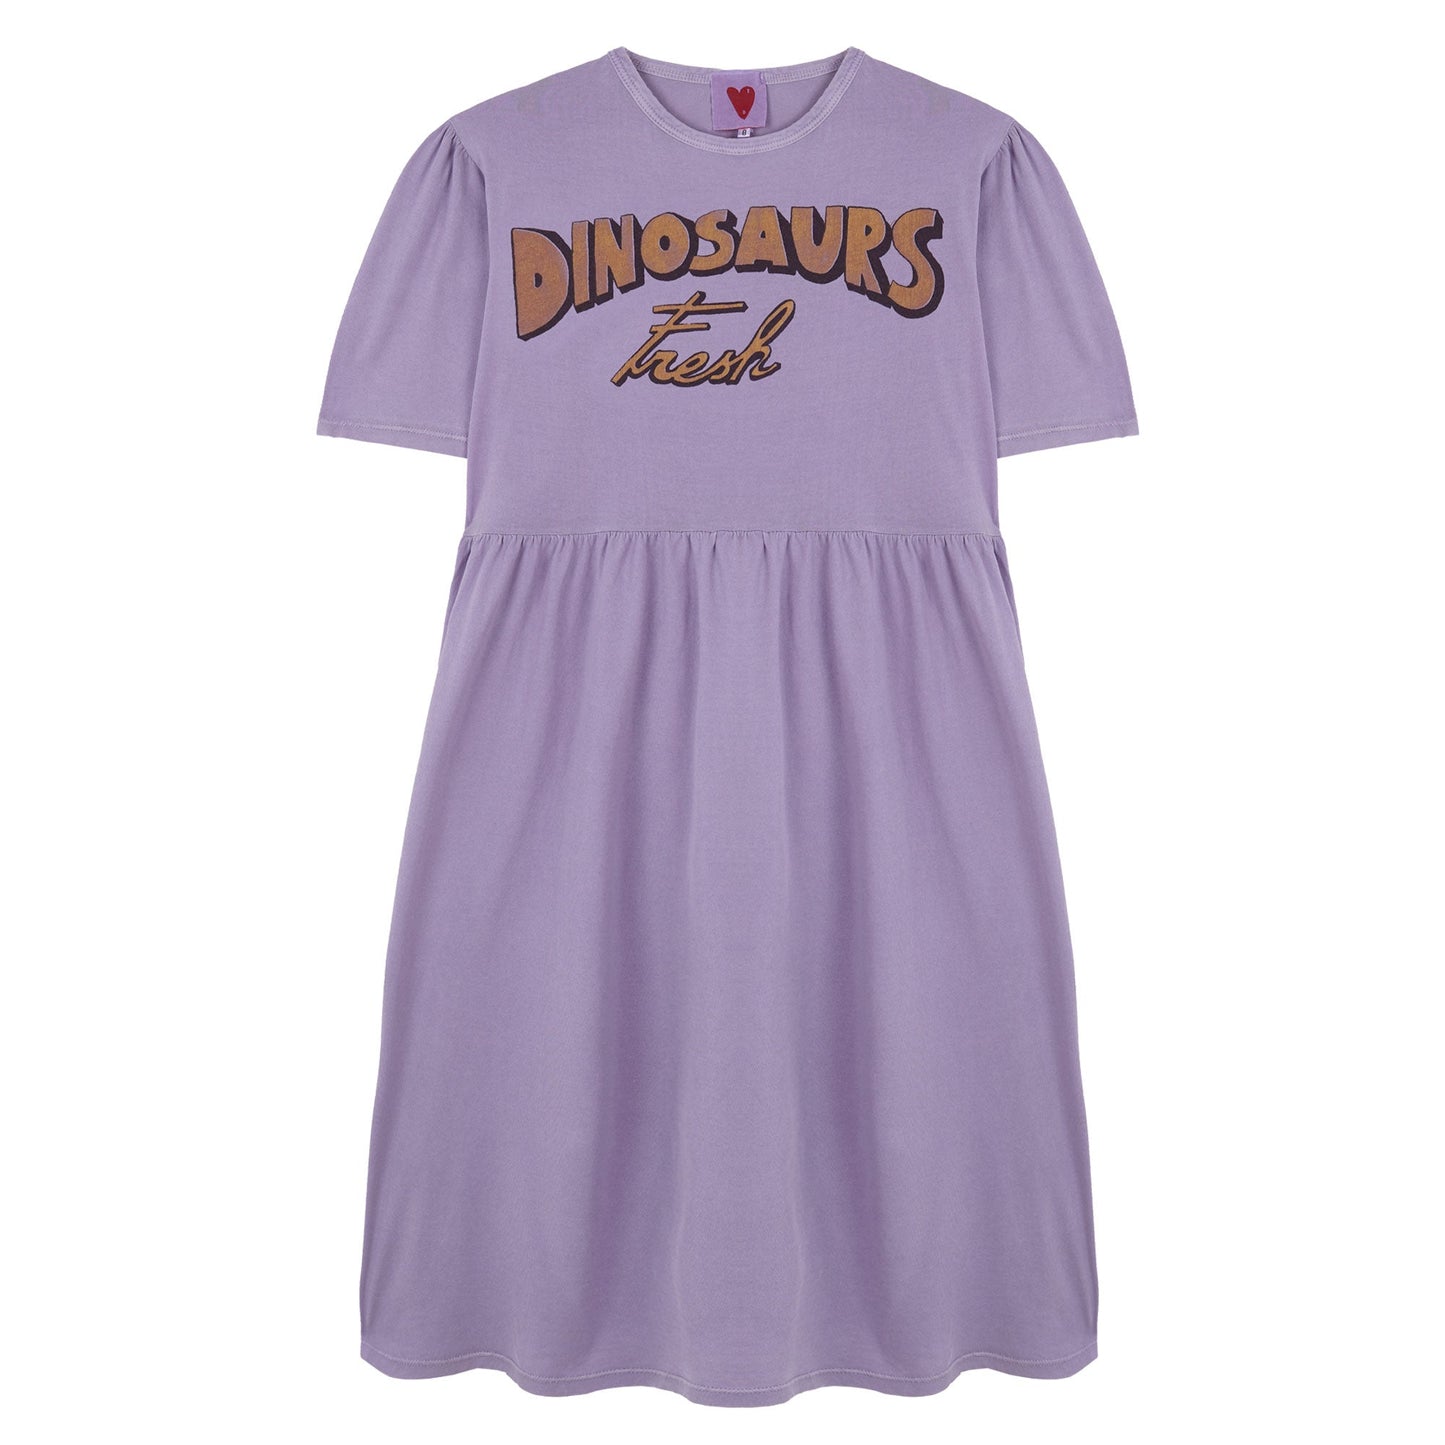 Fresh Dinosaurs Dress - Samples